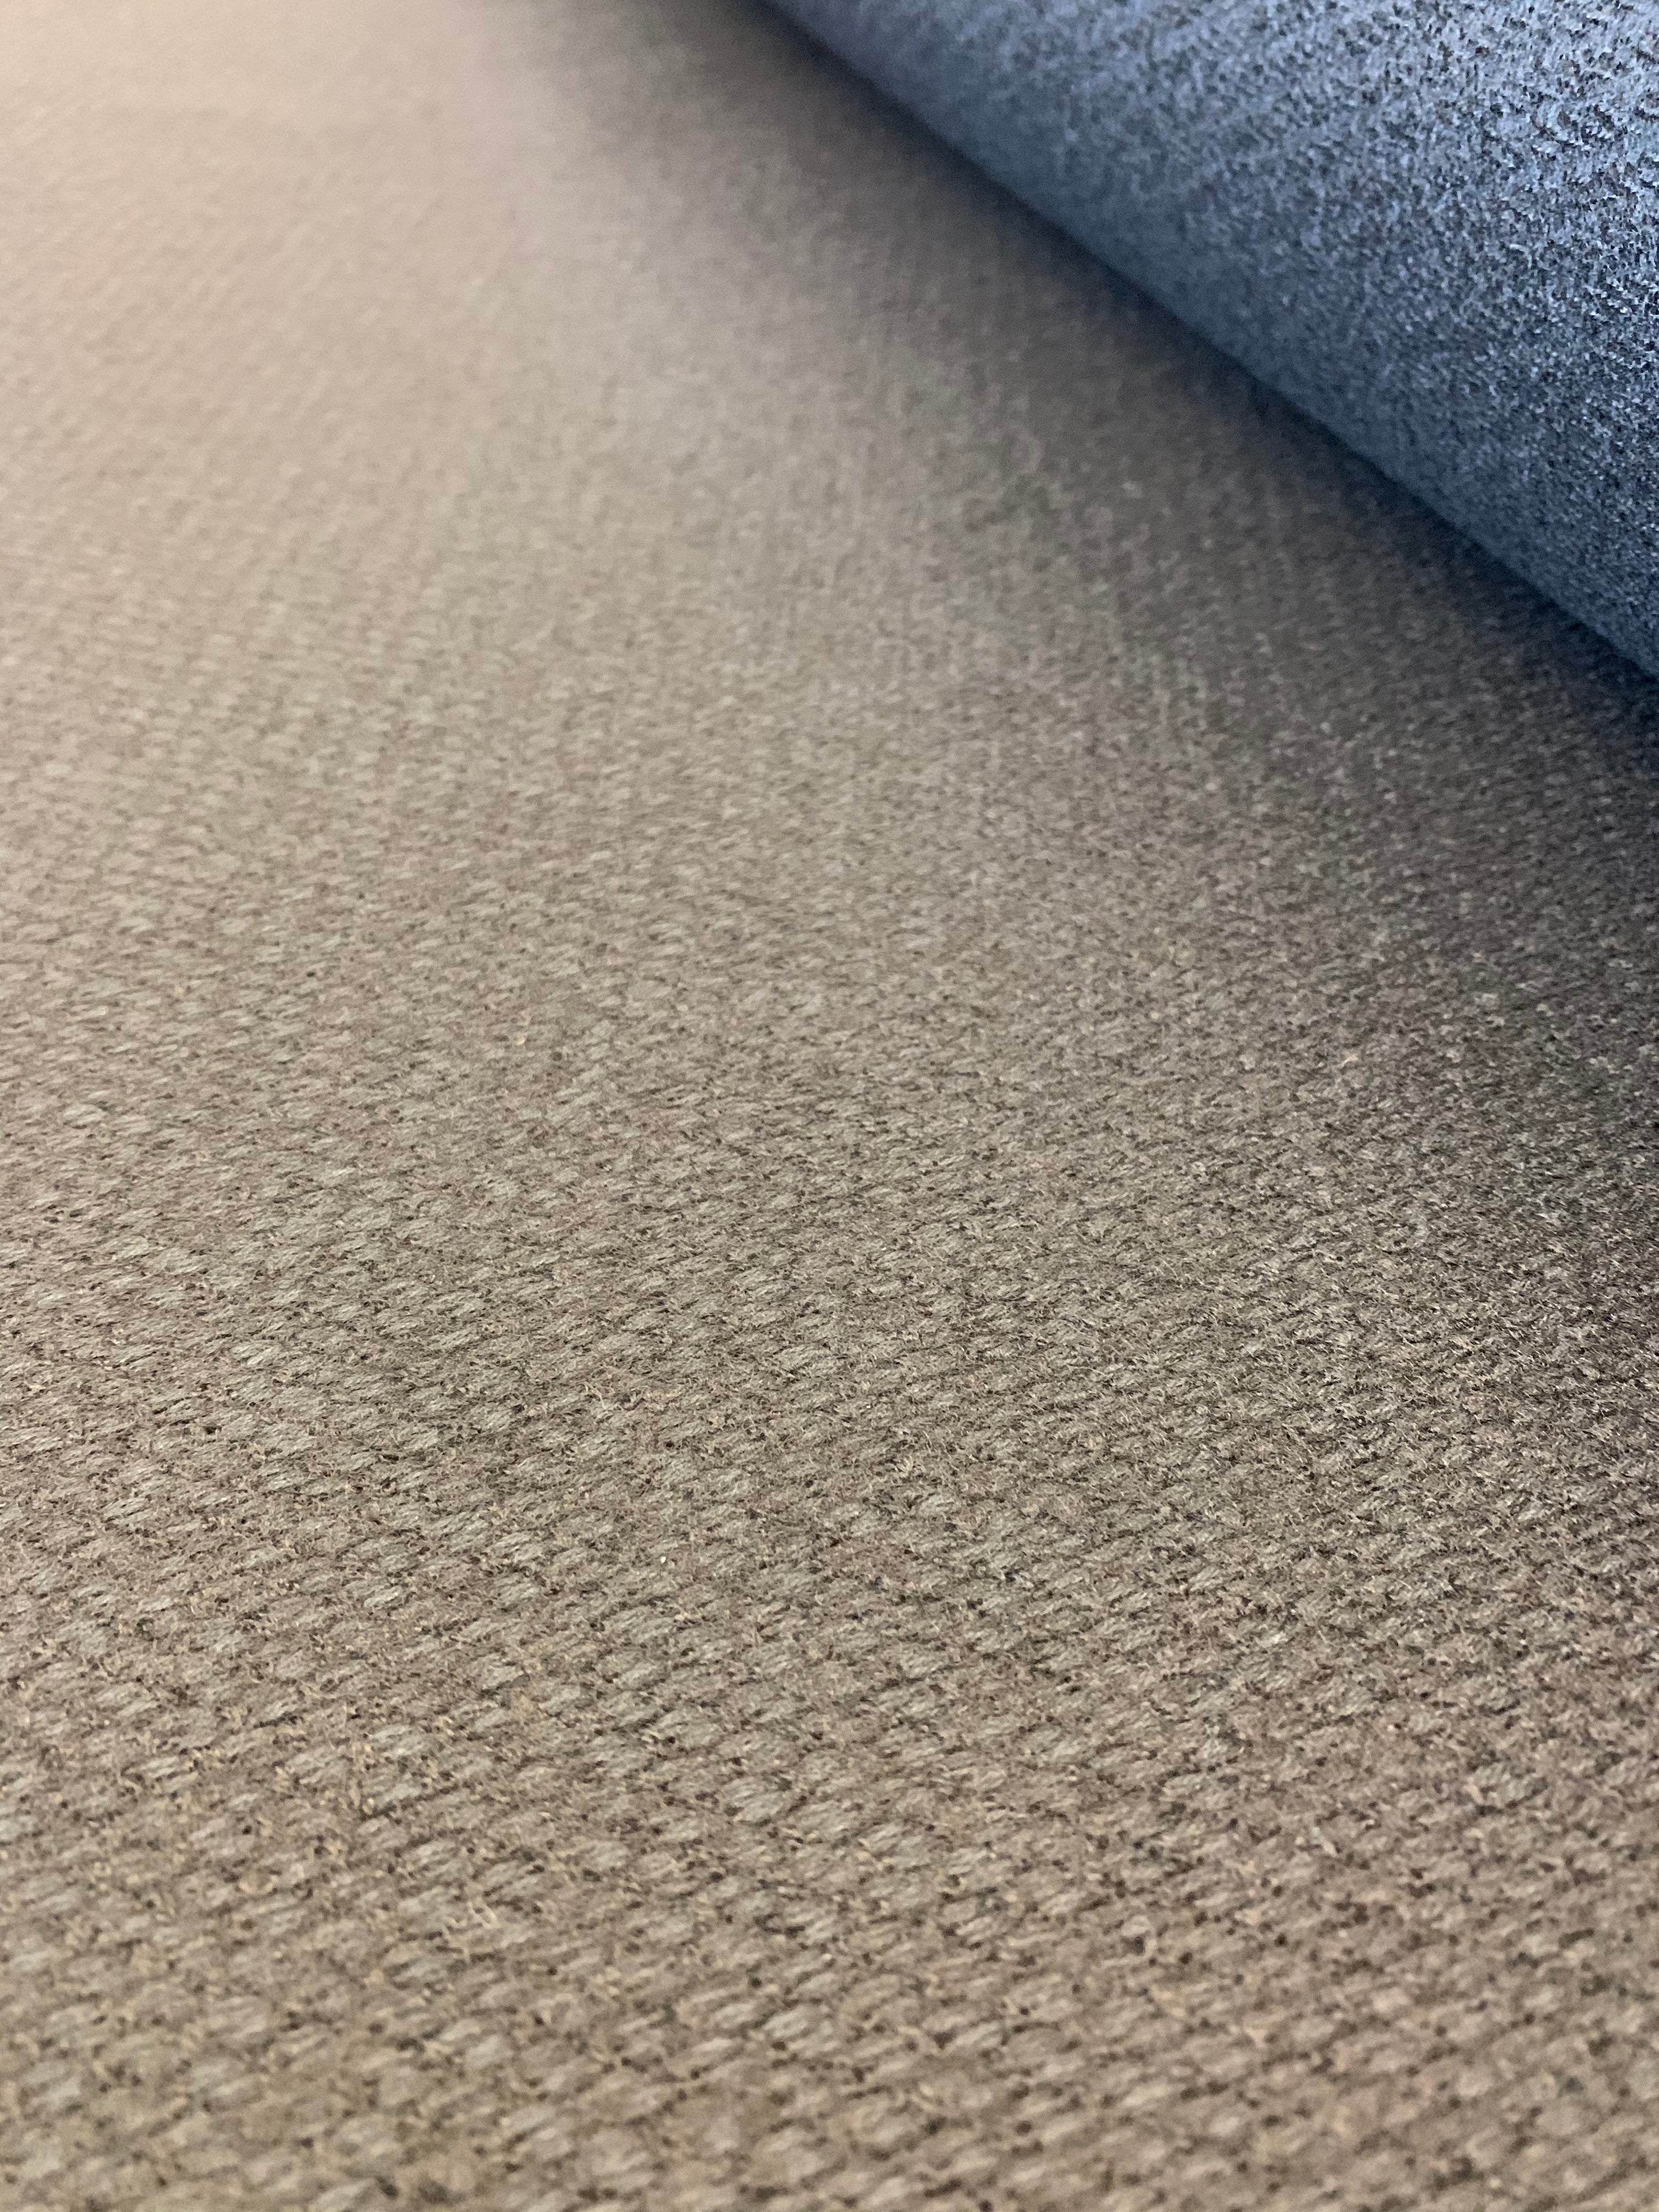 BASKET: Black cotton/wool coating fabric